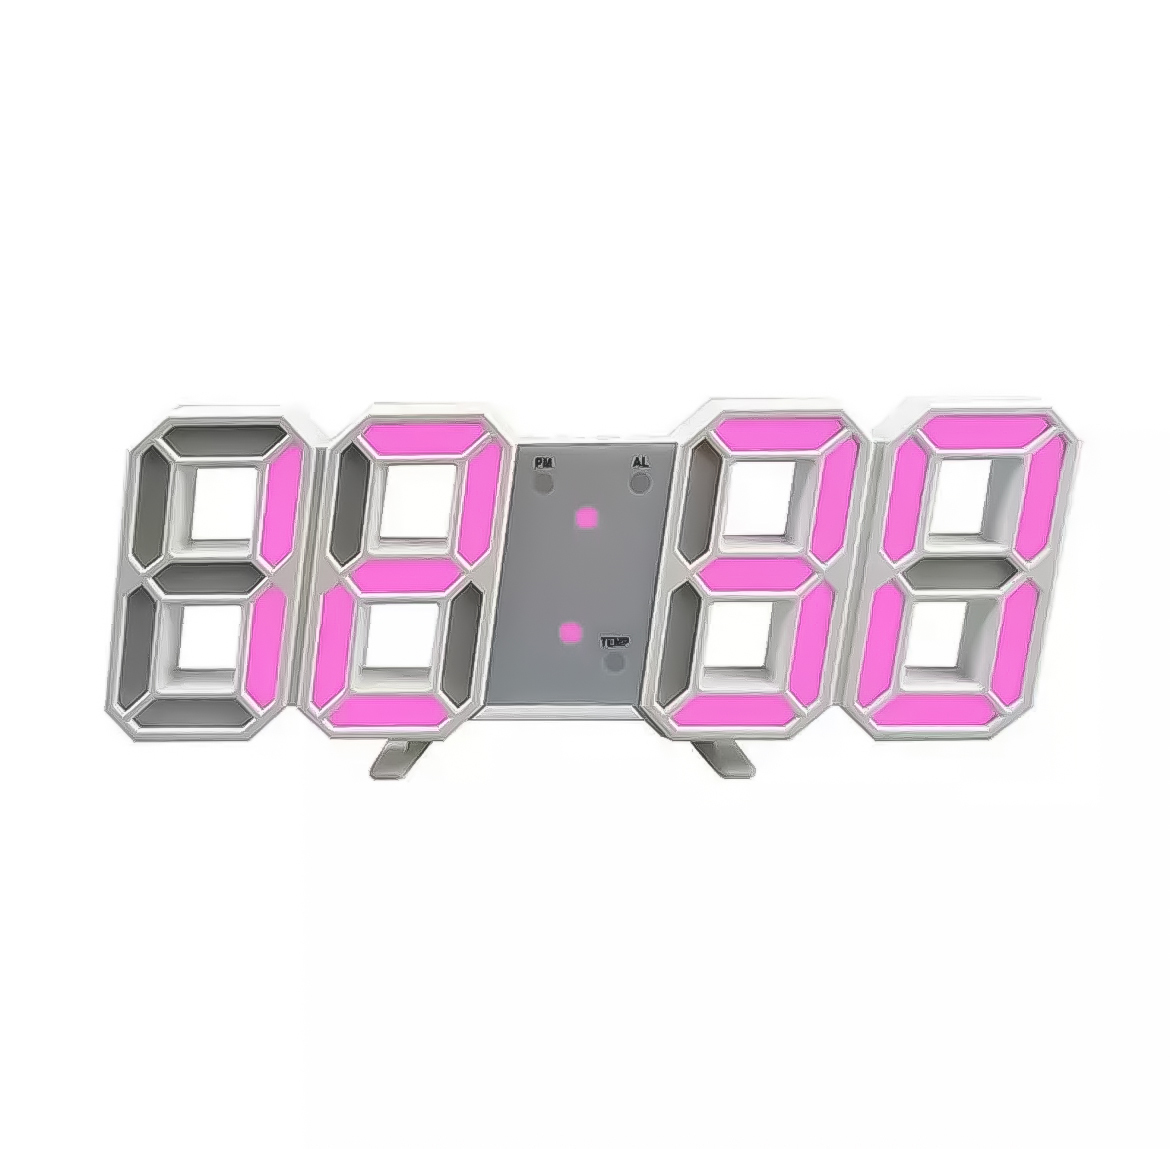 3D立体時計 ピンク LED壁掛け時計 置き時計 両用 デジタル時計 インスタ映え 置き型 LED デジタル アラーム付 目覚まし時計☆の画像1